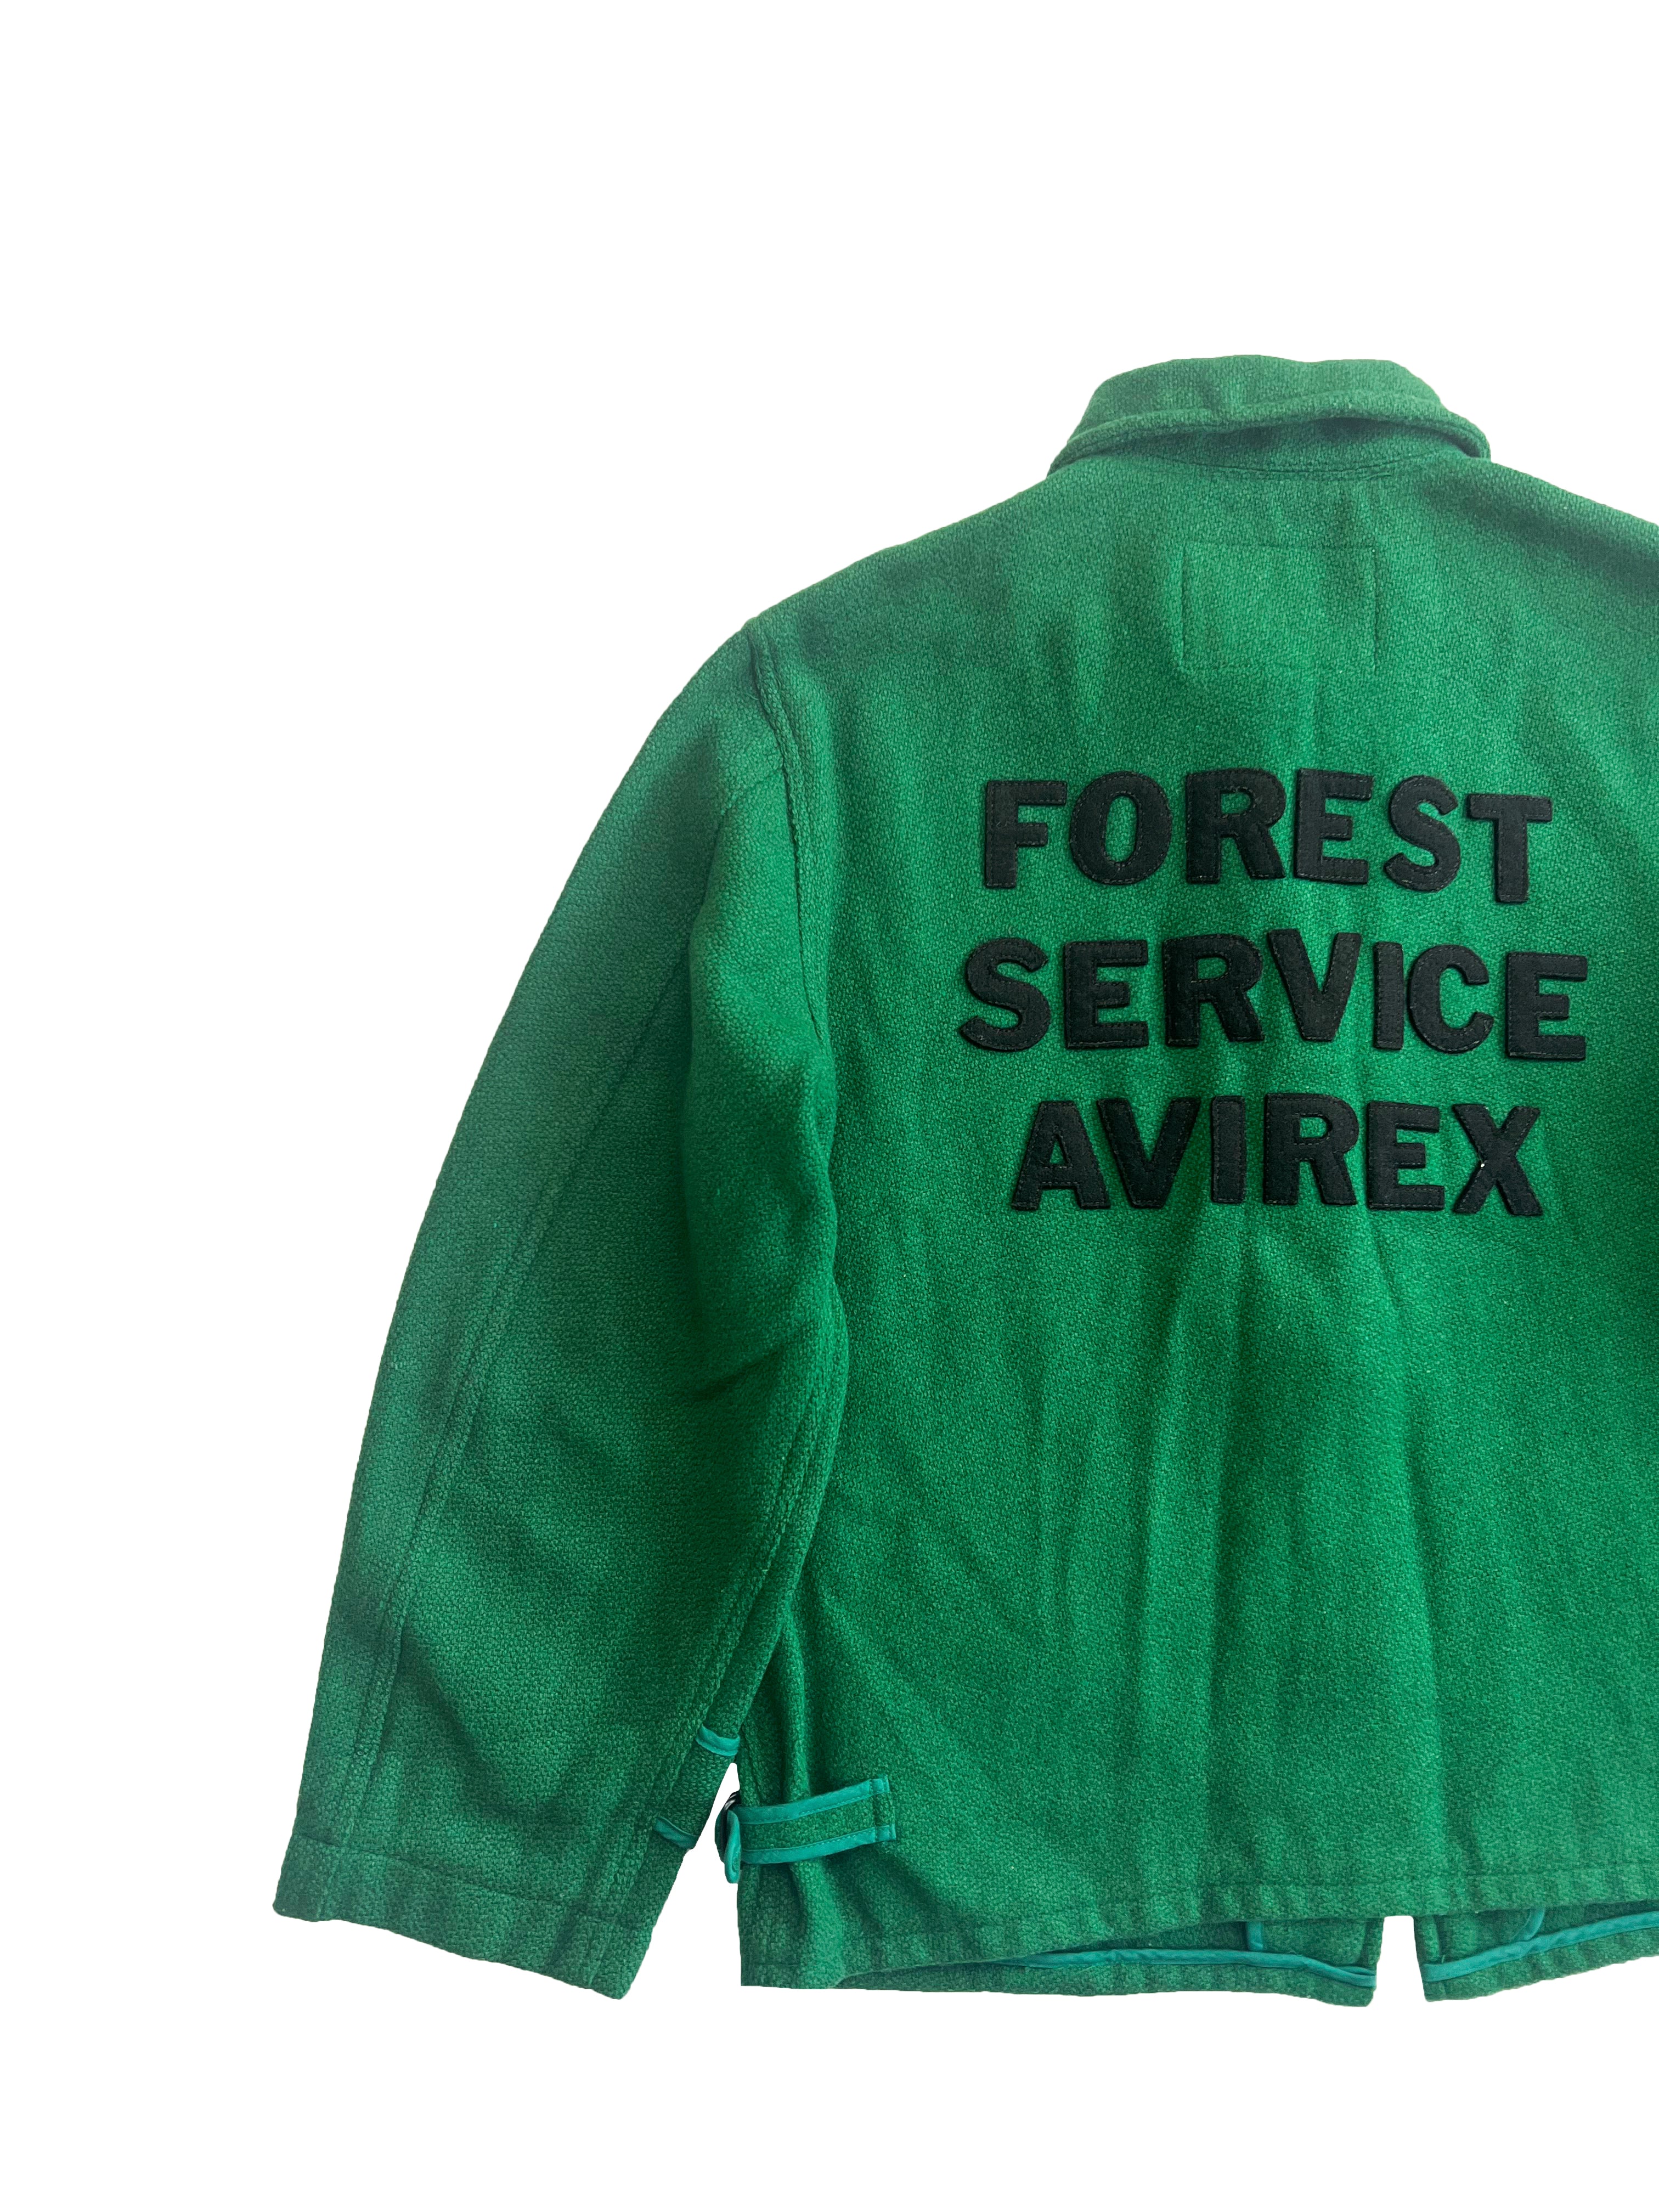 Avirex 'Forest Service' Green Jacket 80's